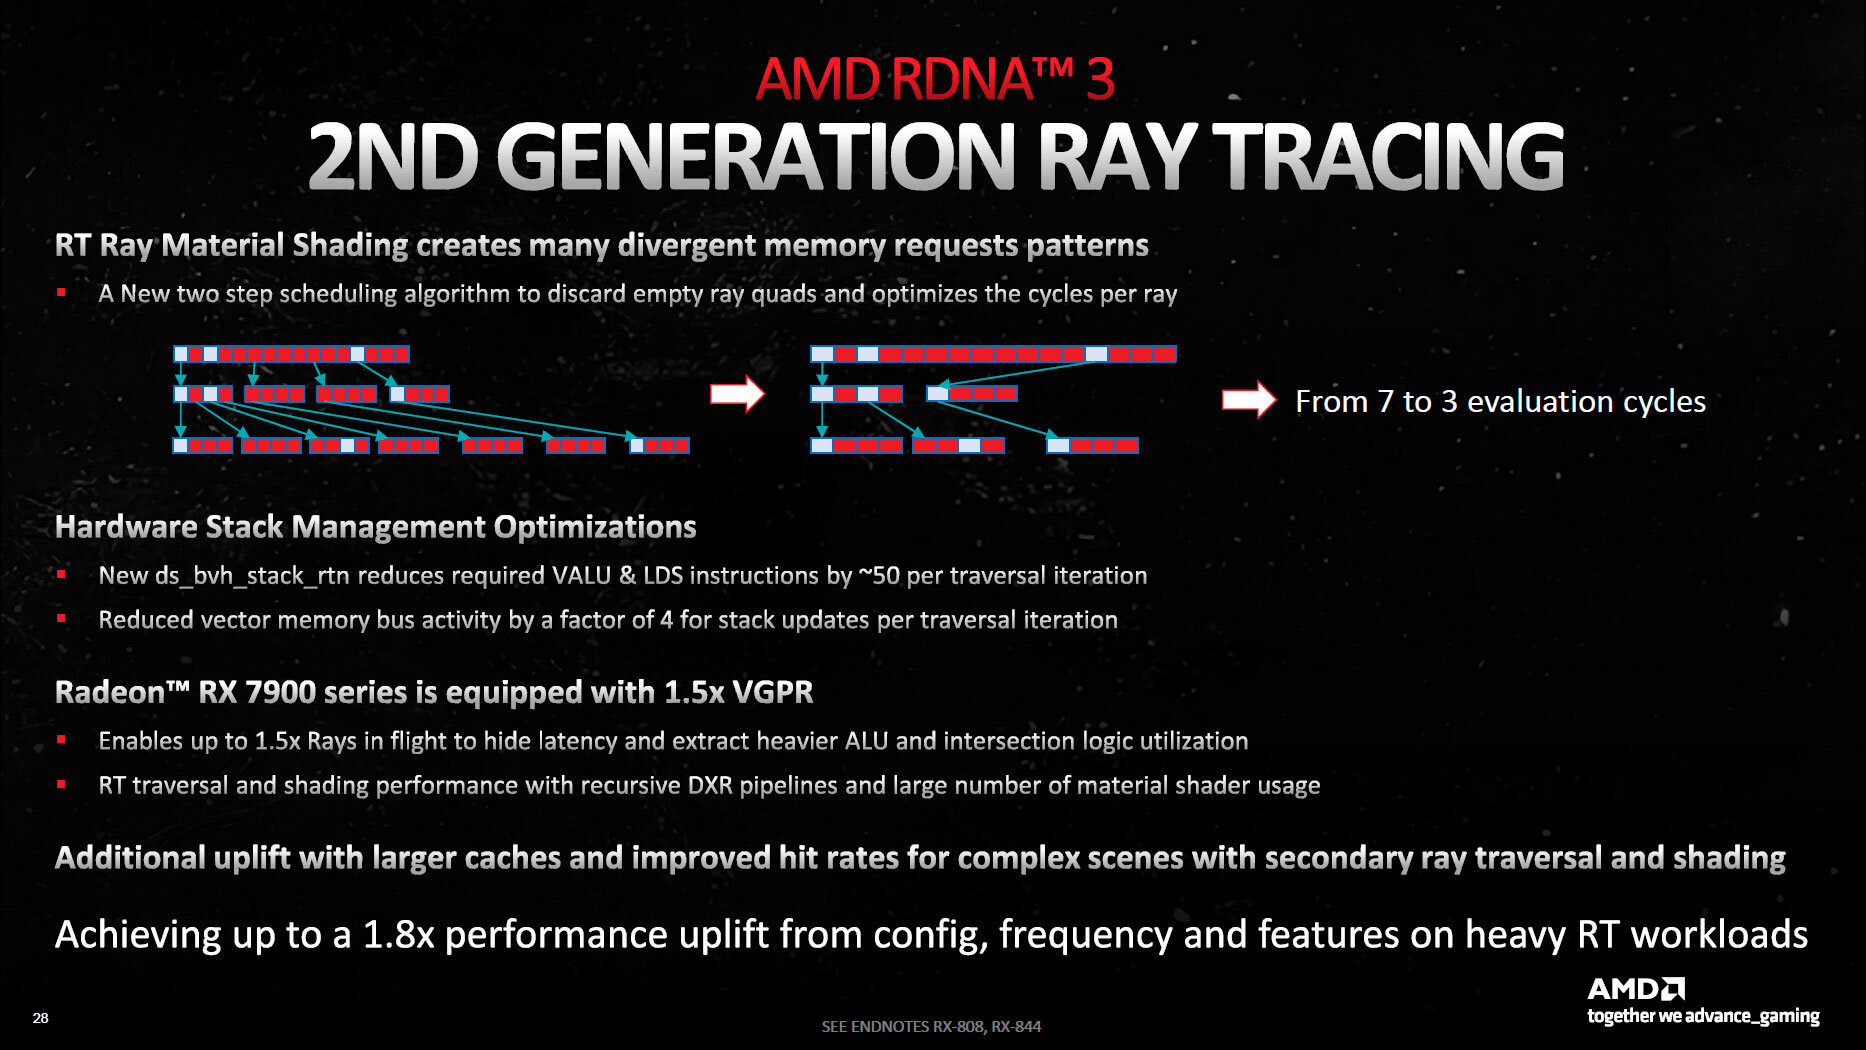 AMDs second-gen raytracing